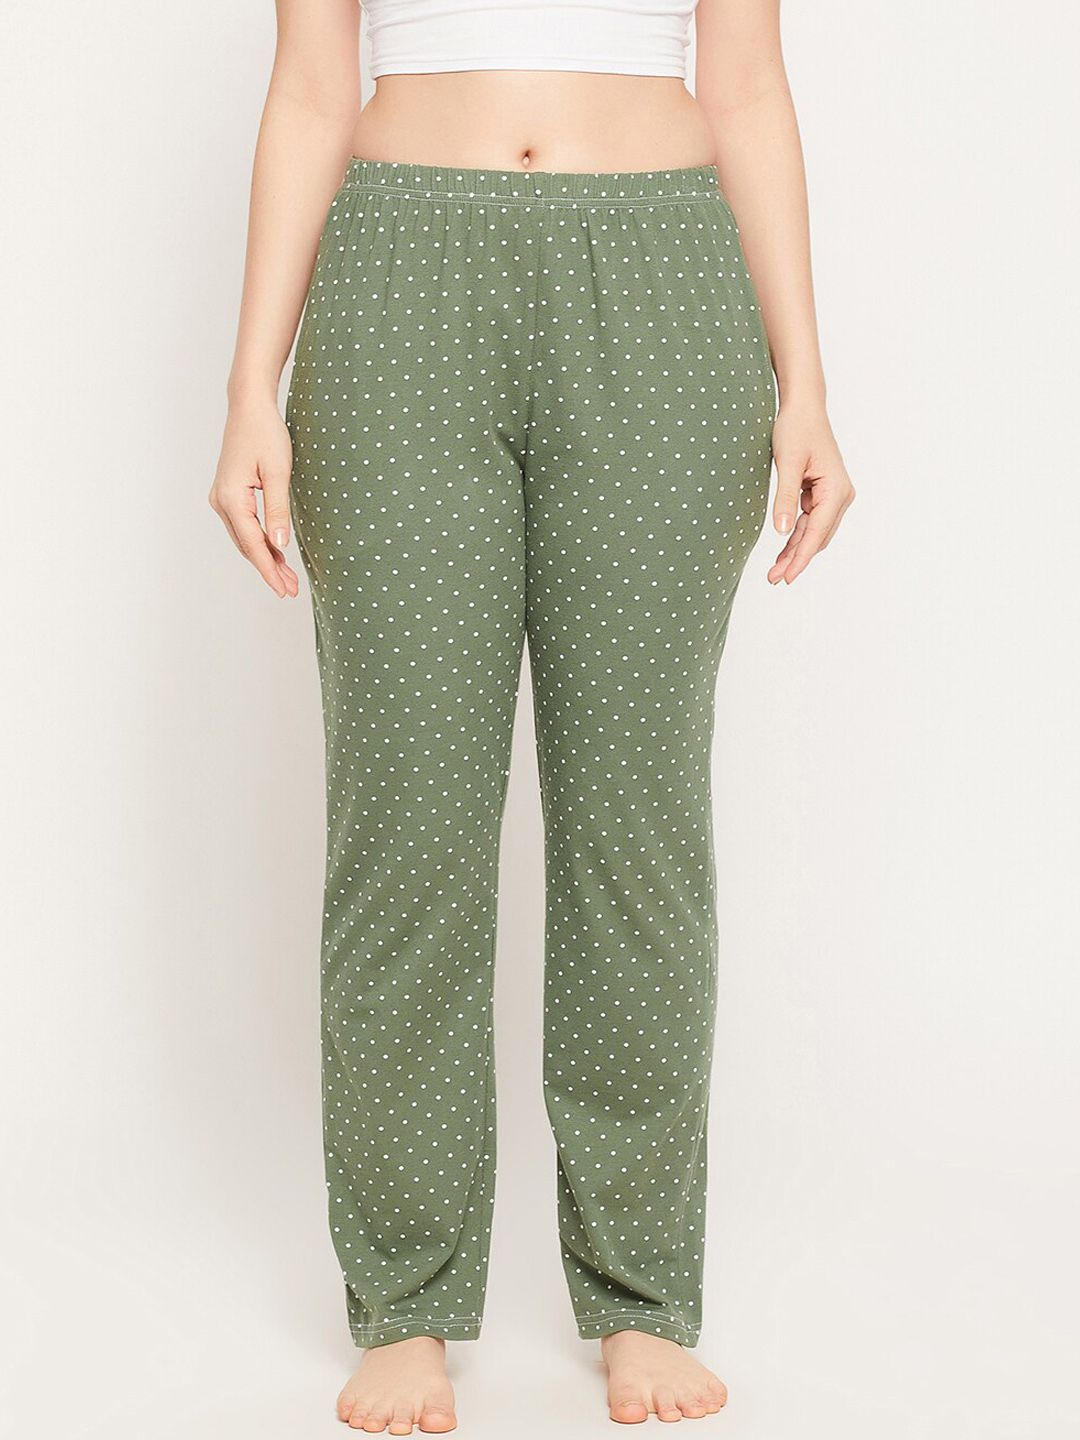 Clovia Women Green Polka Dot Printed Cotton Lounge Pants Price in India